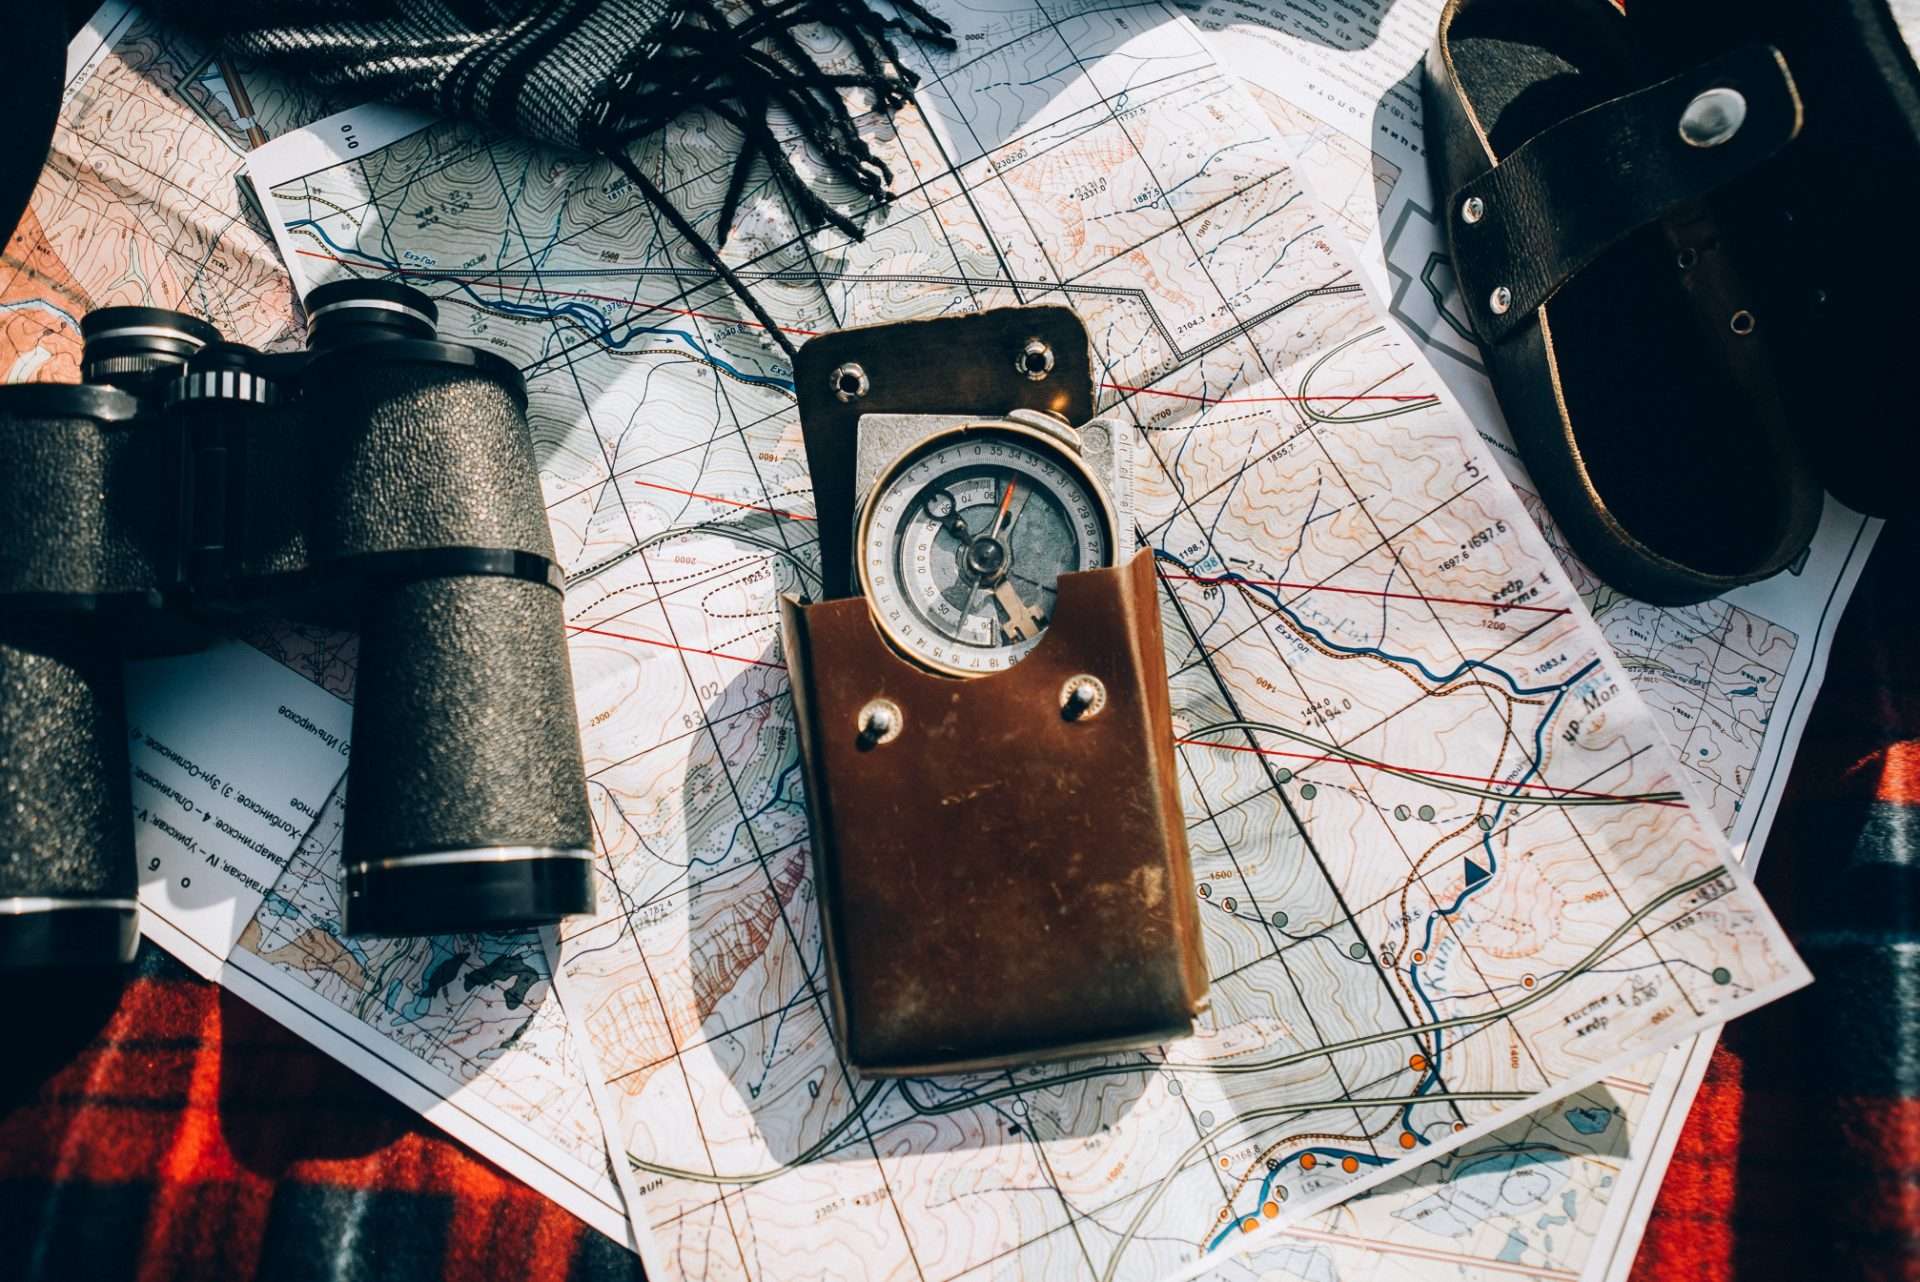 Maps, compass, and binoculars.